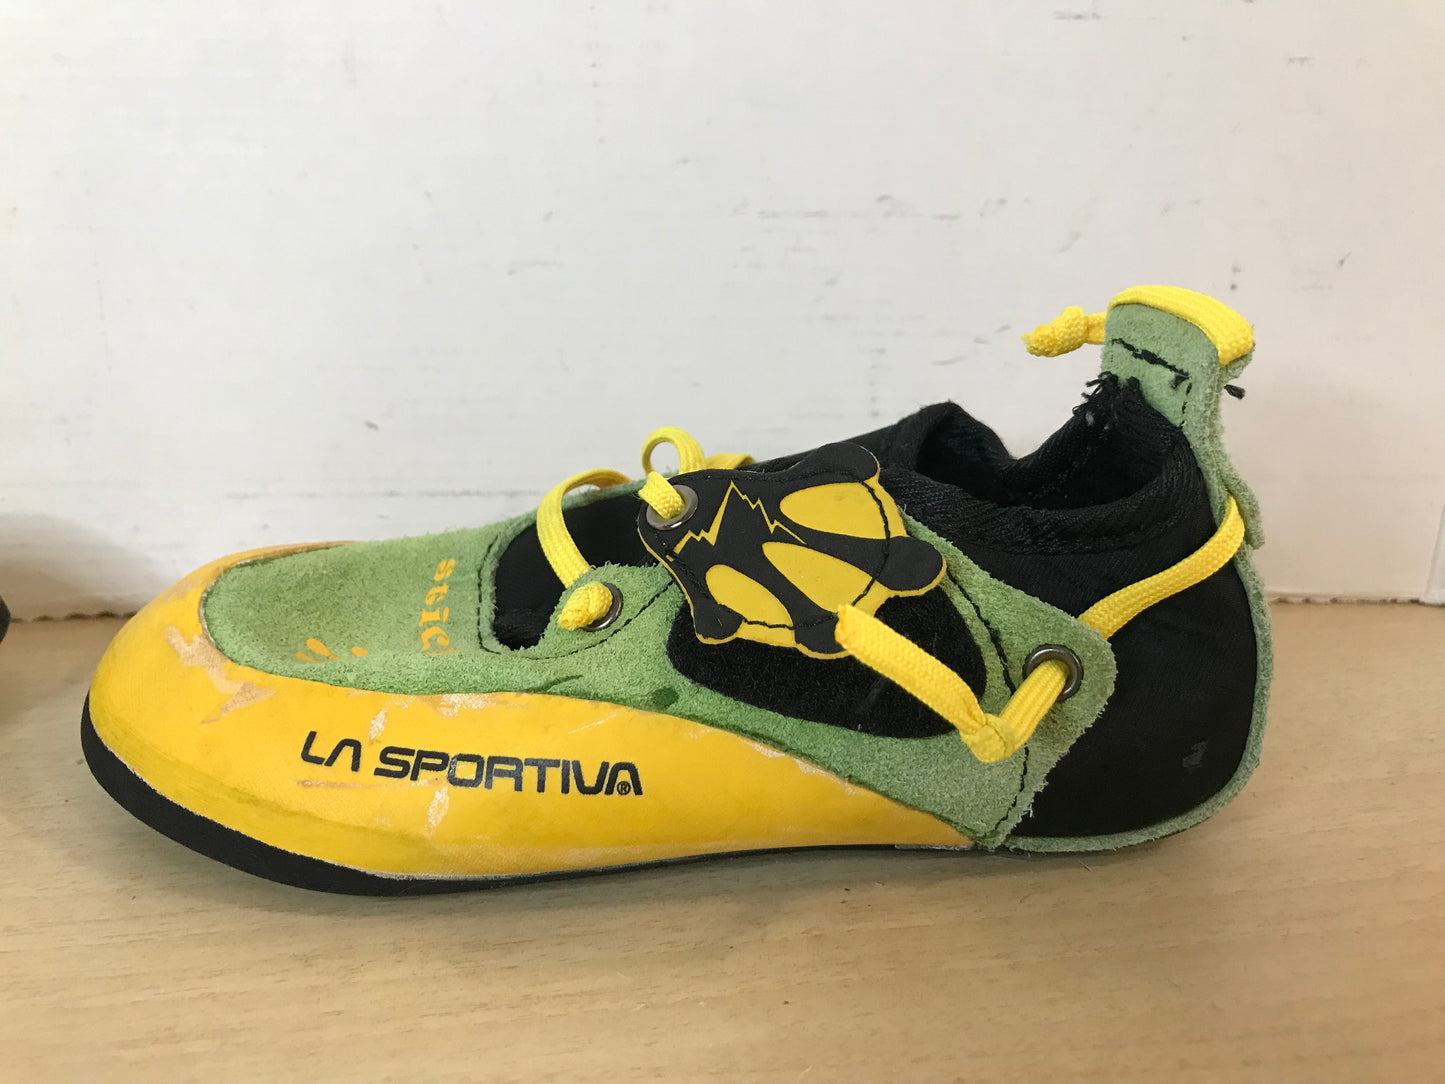 Rock Climbing Shoes Child Size 12-13 La Sportiva Lime and Lemon